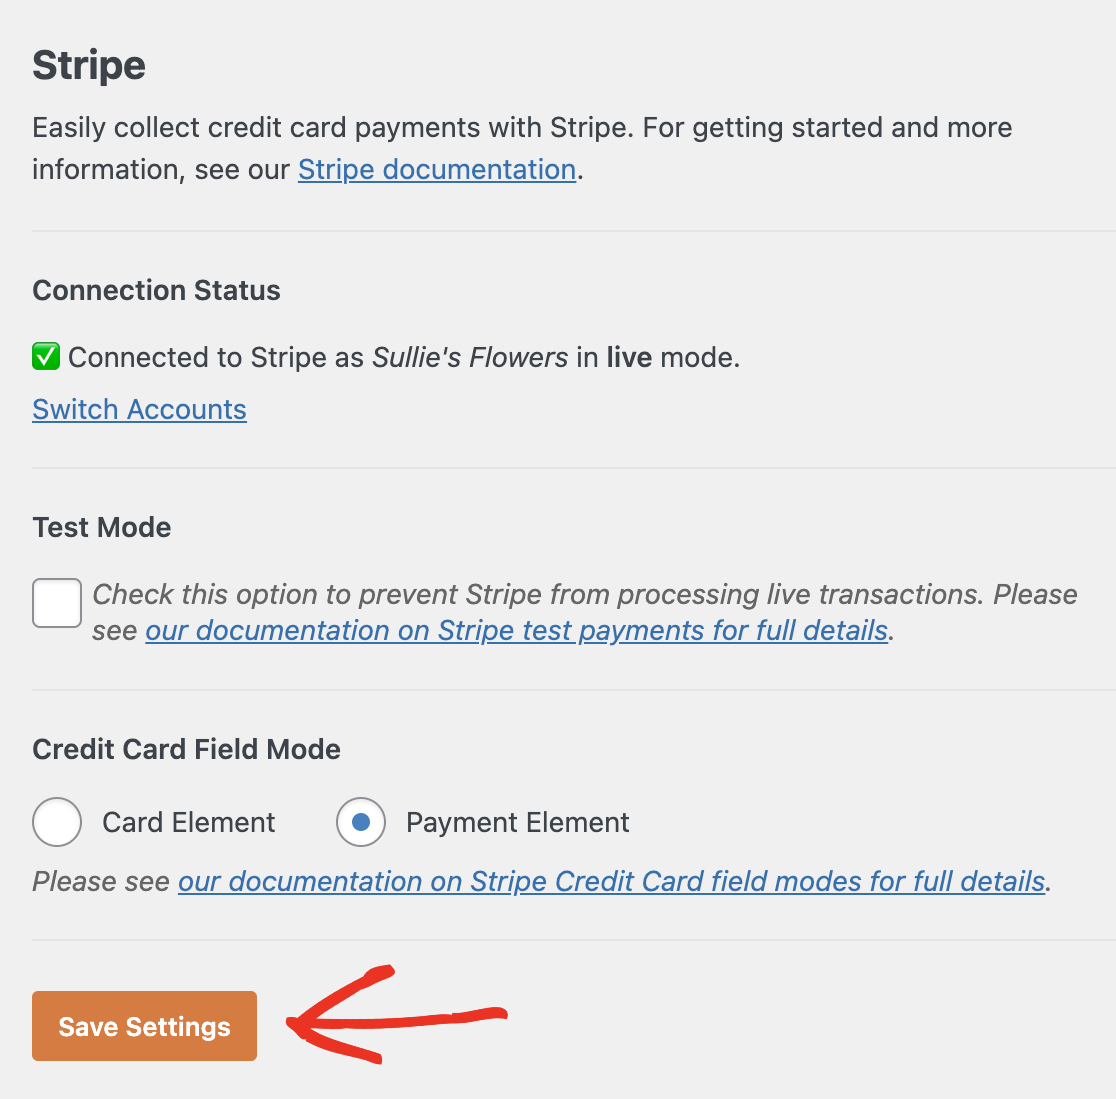 Saving Stripe payment settings